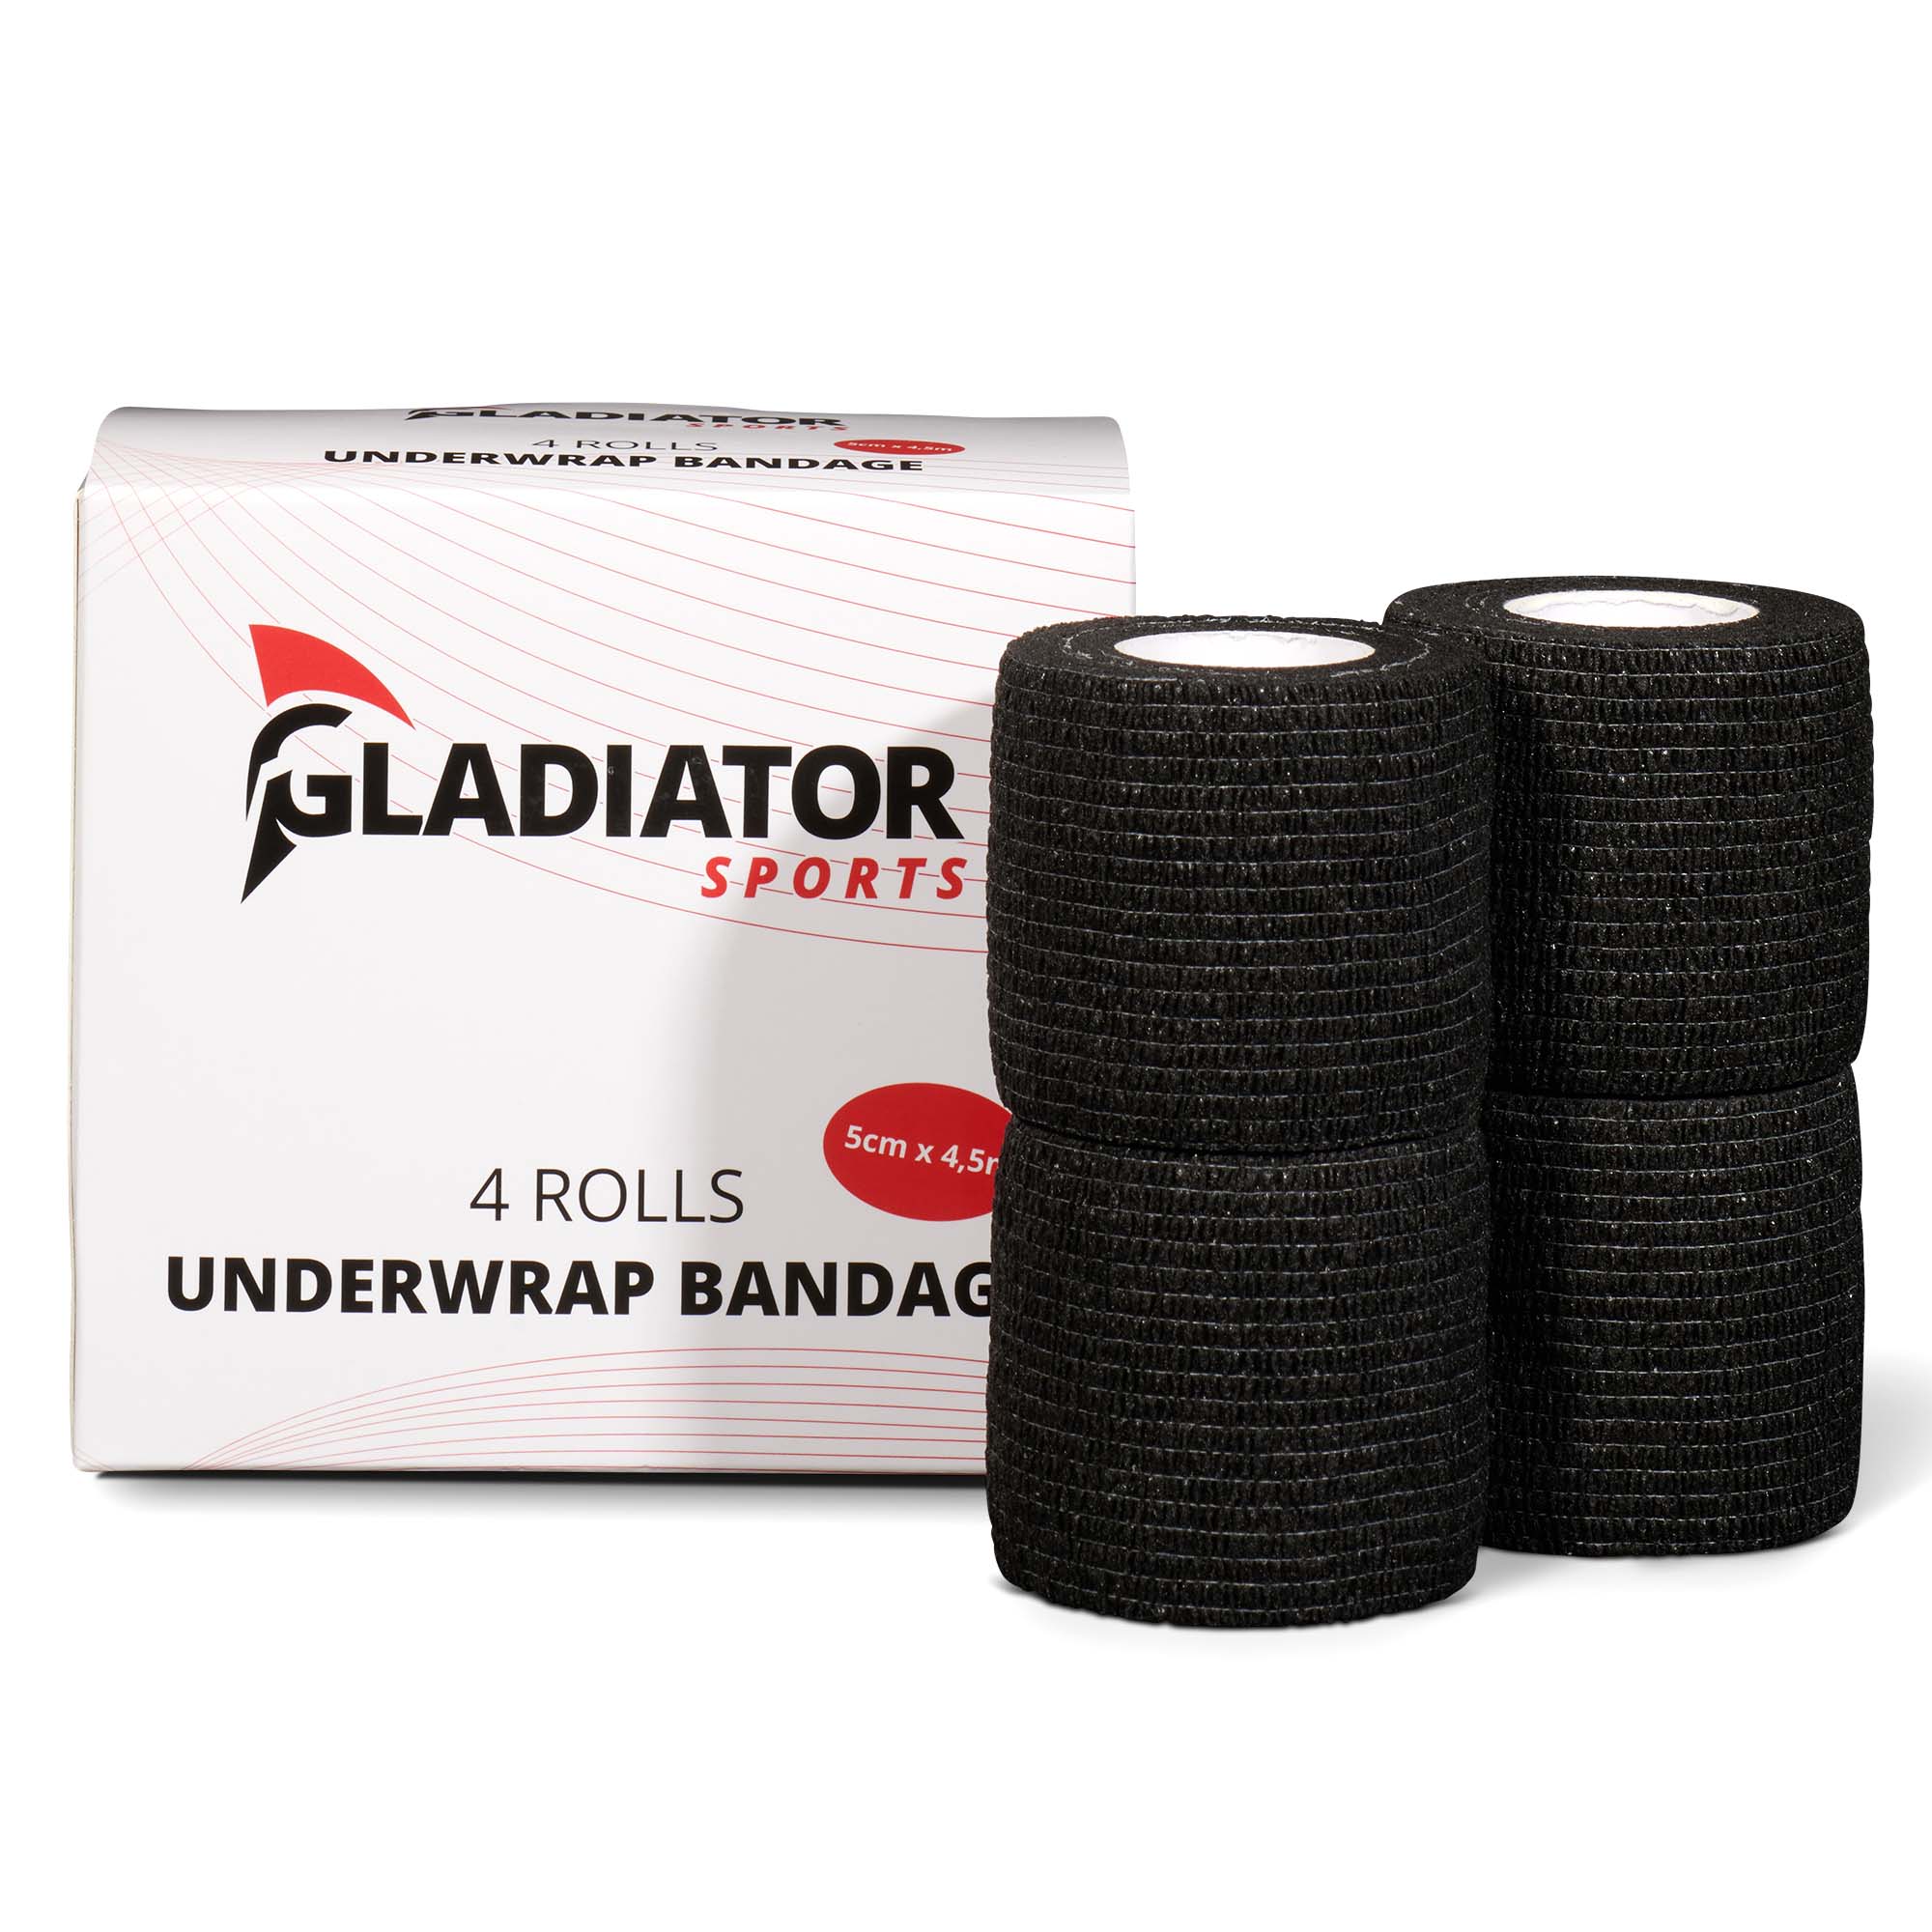 Gladiator Sports underwrap bandage 4 rolls with box black